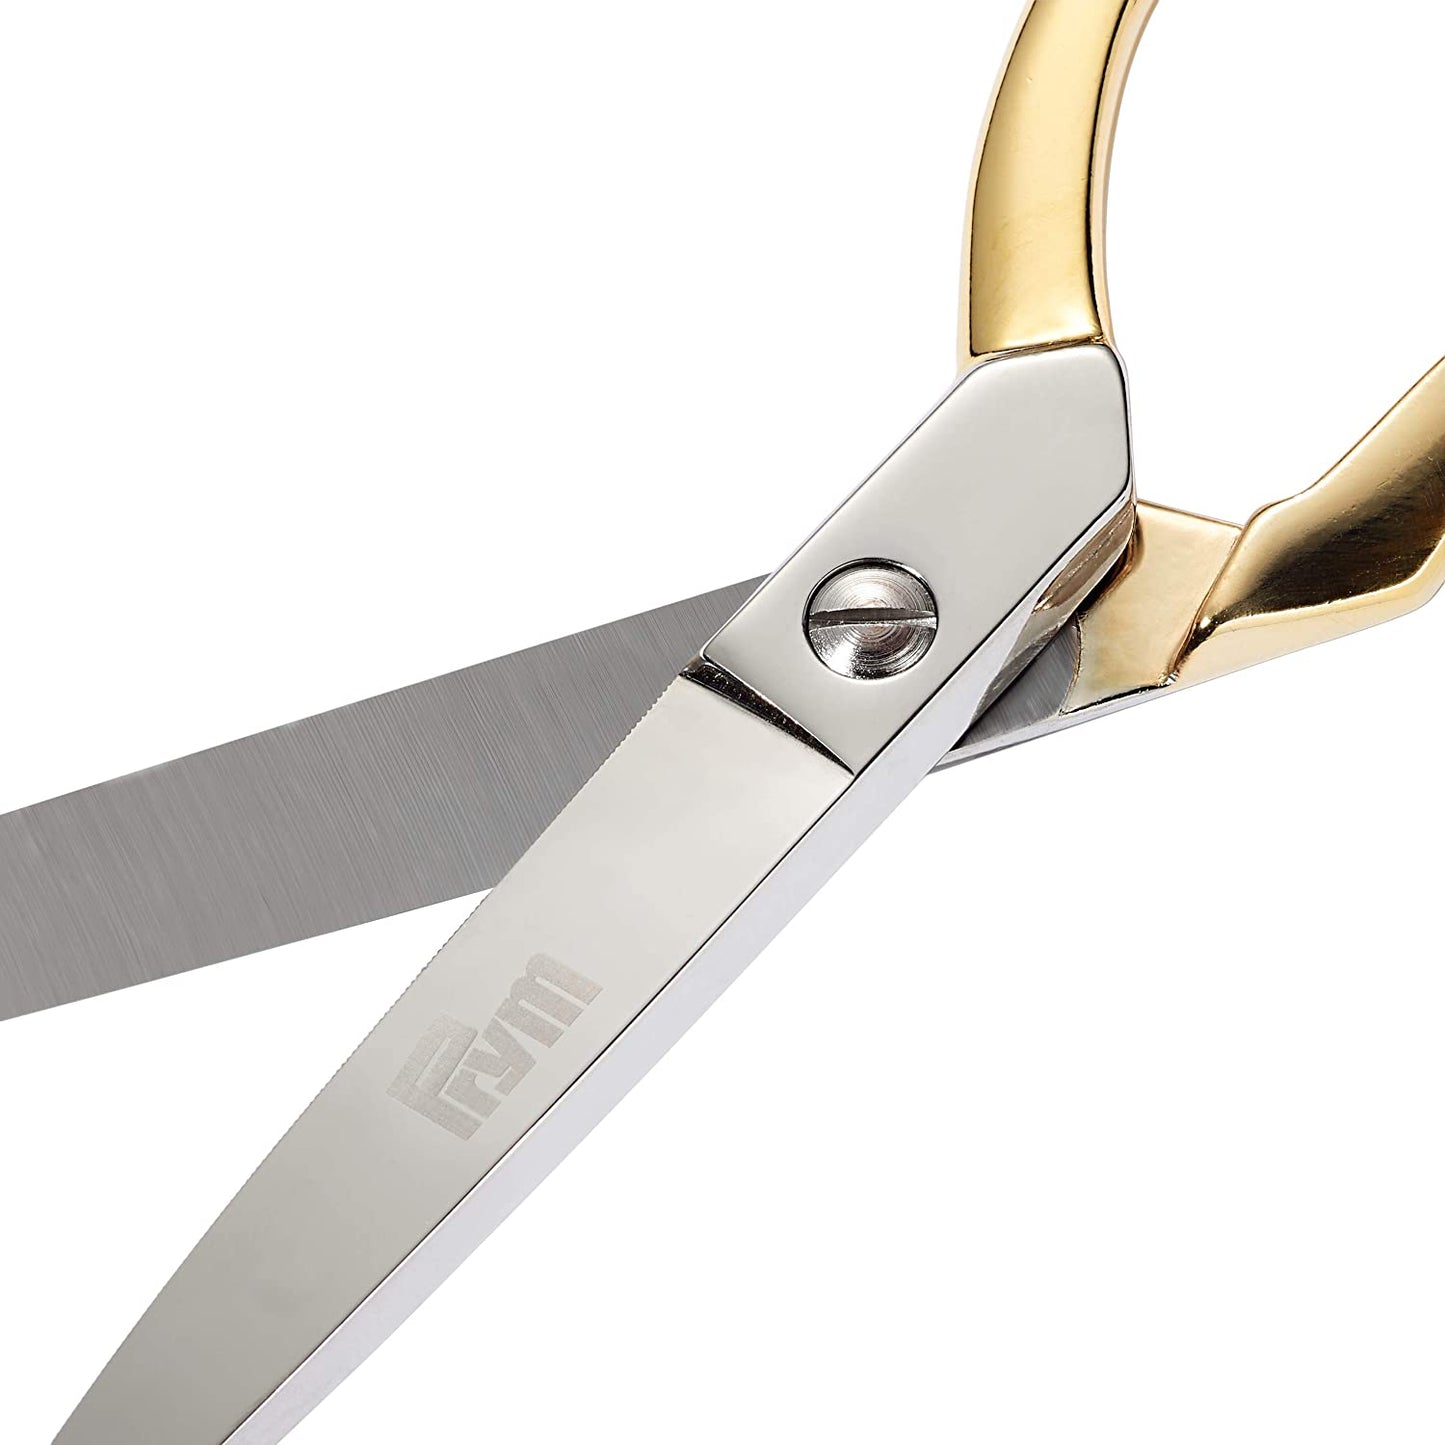 Prym - Premium Gold Tailors Shears - Micro Serated - 20cm 8"